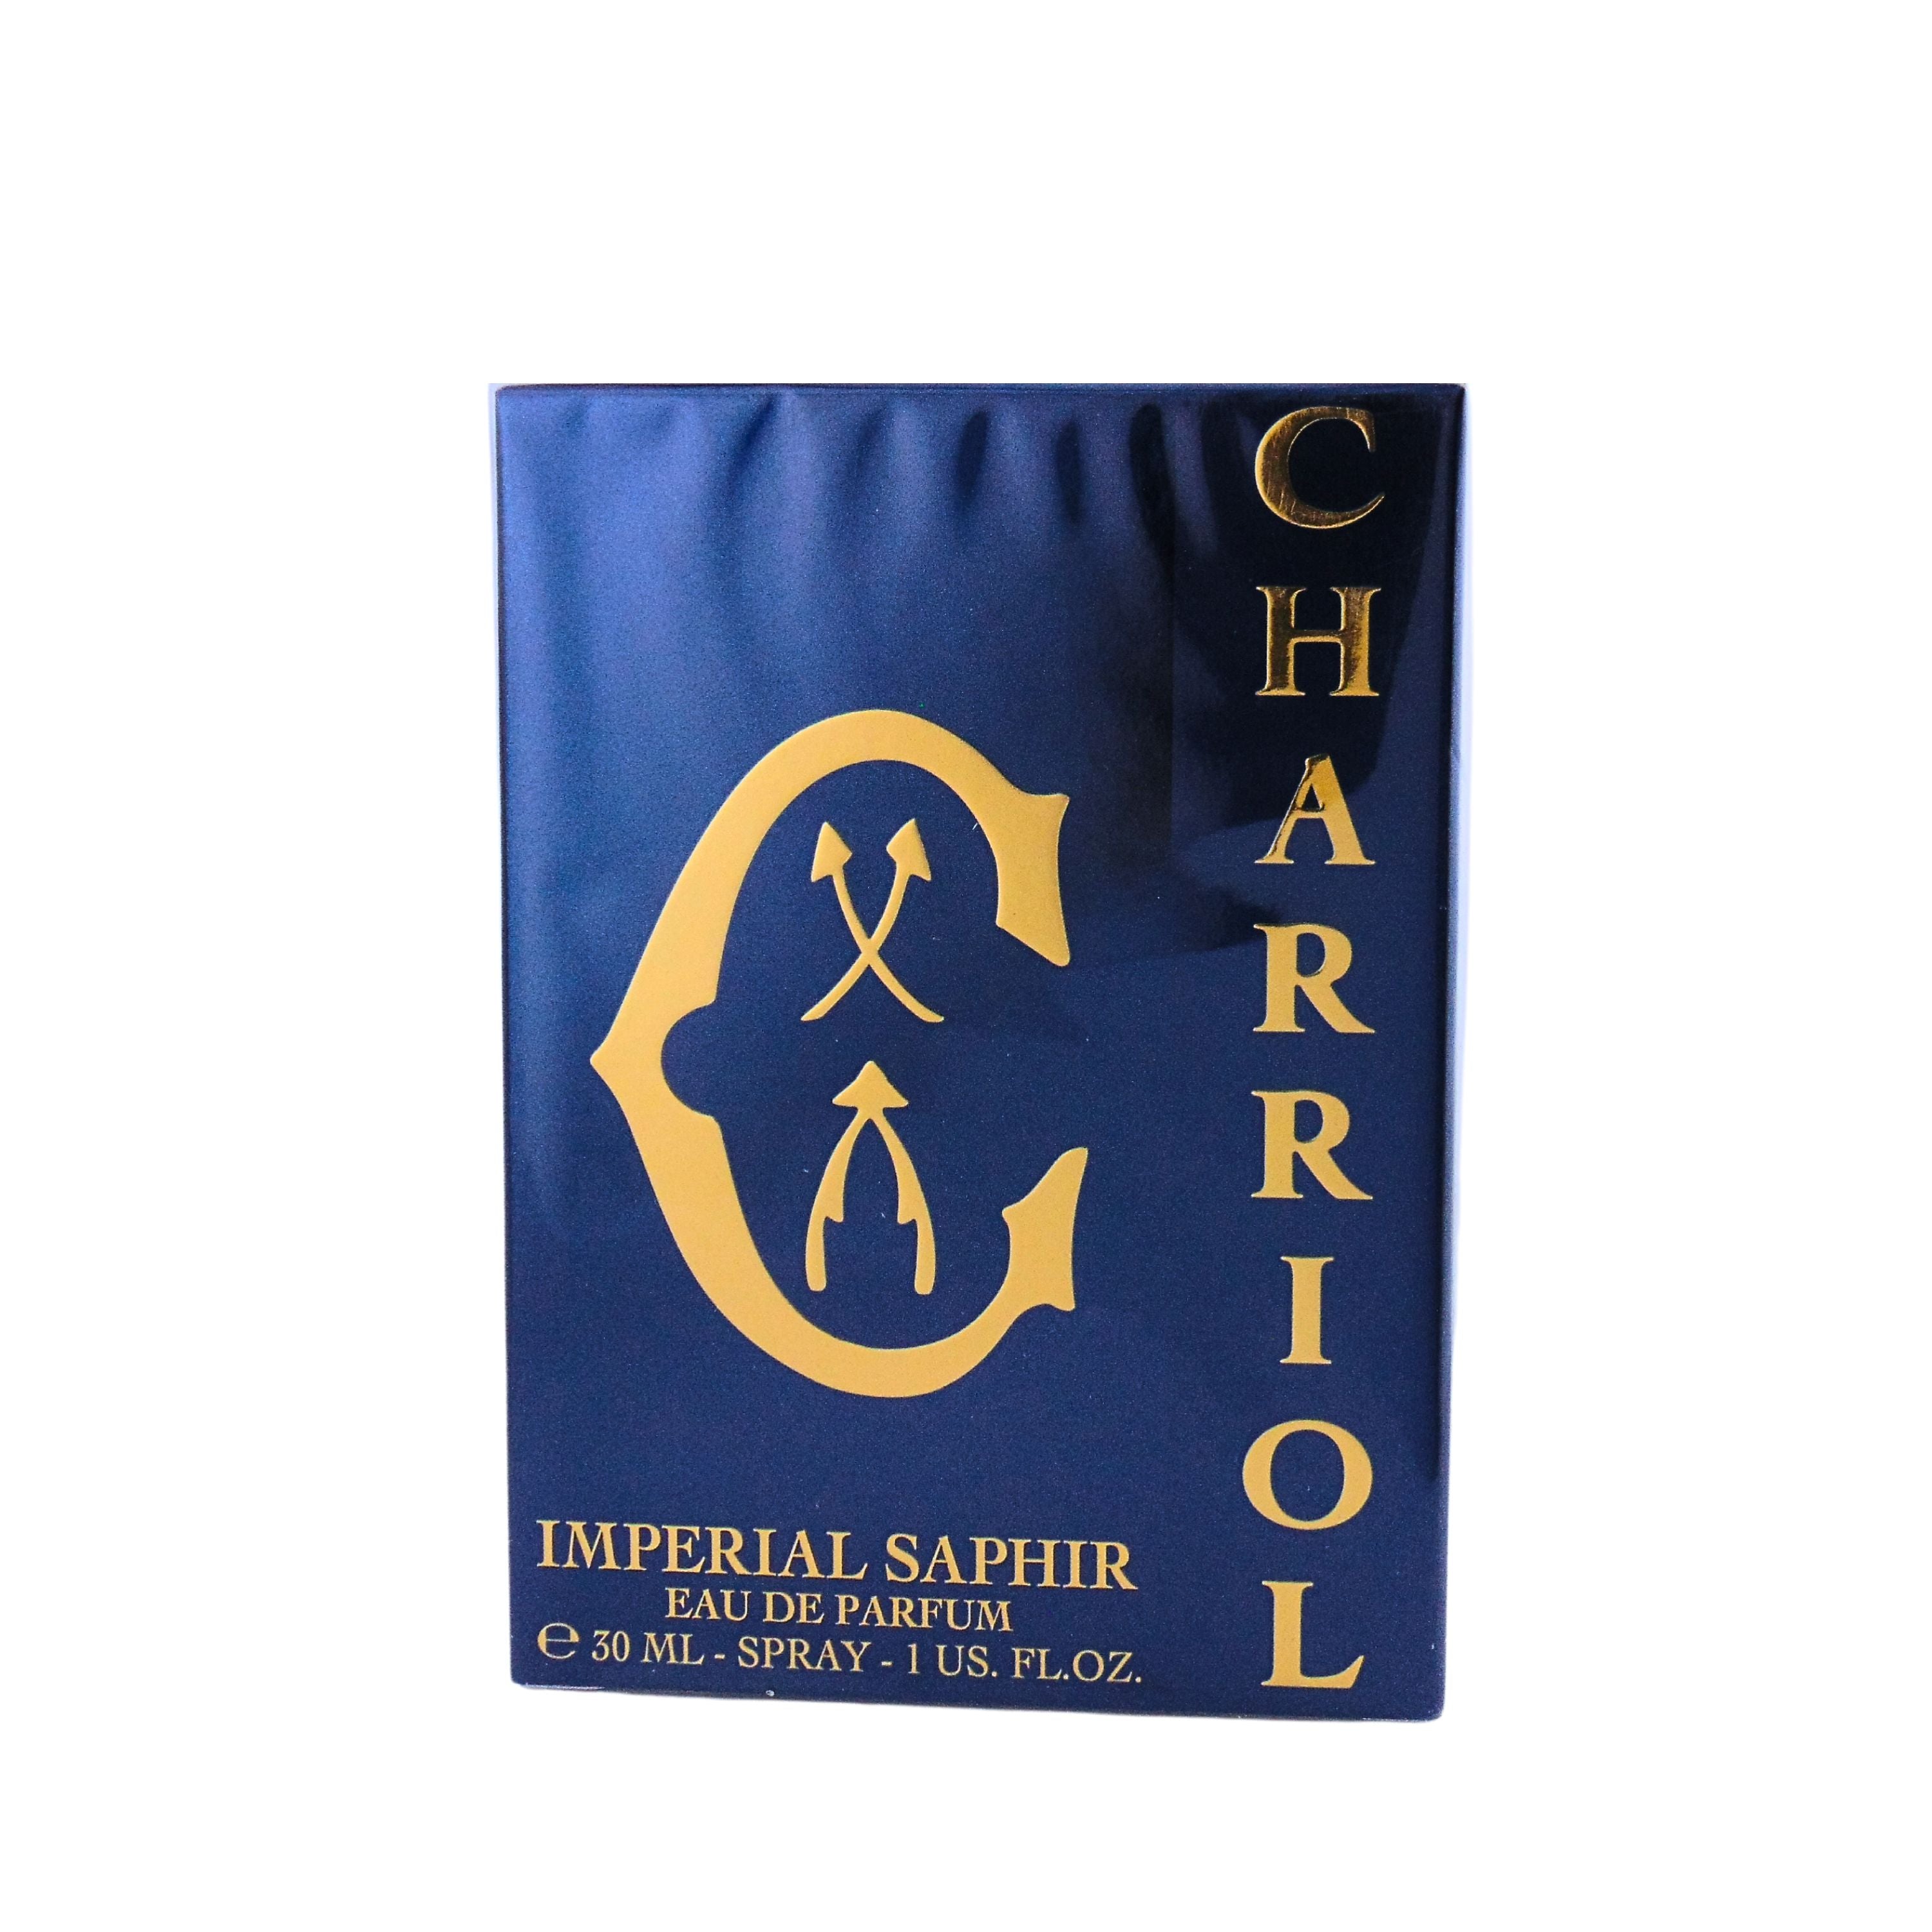 Charriol Imperial Saphir Eau de Parfum for Women